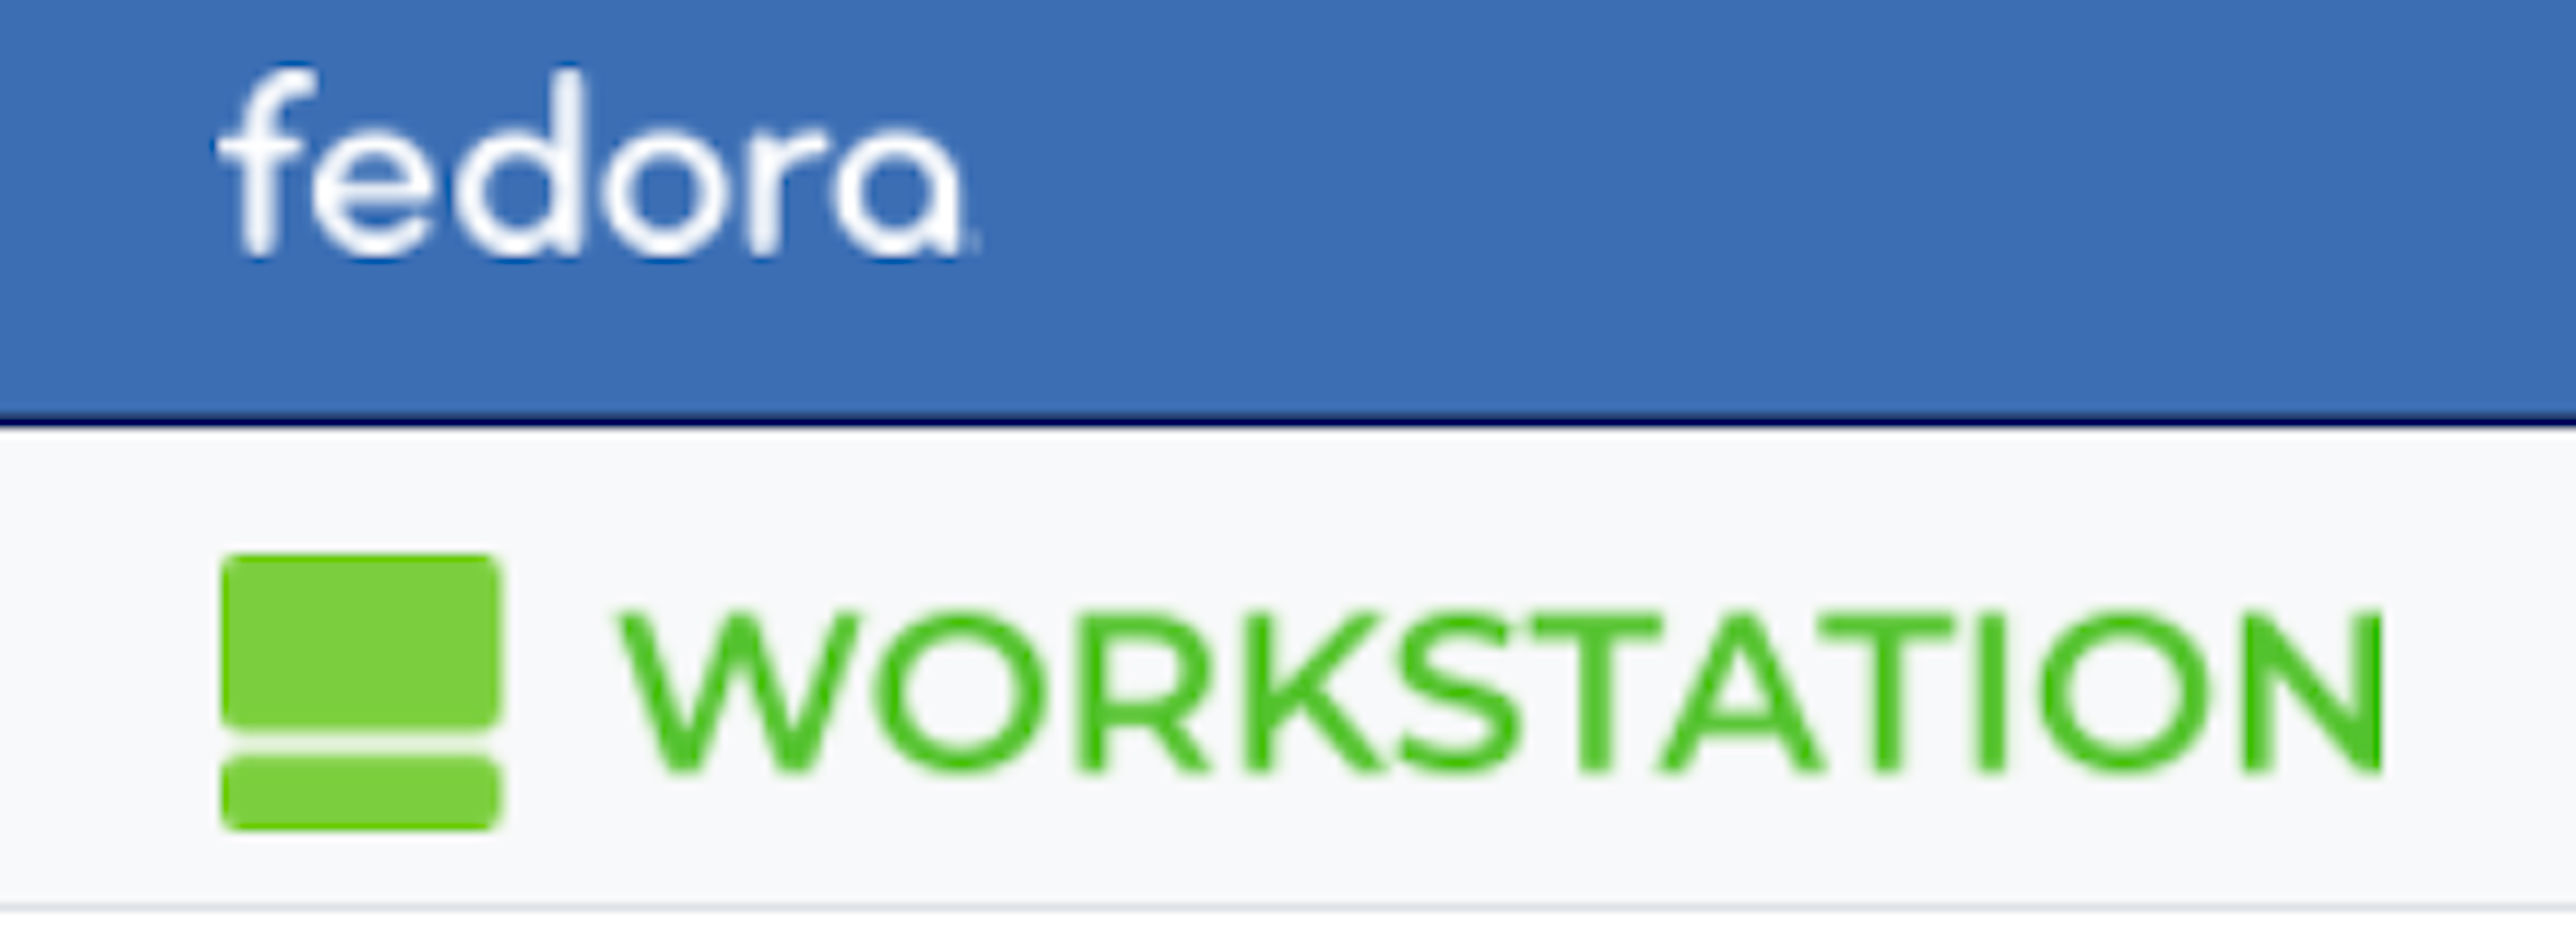 Fedora Workstation Logo